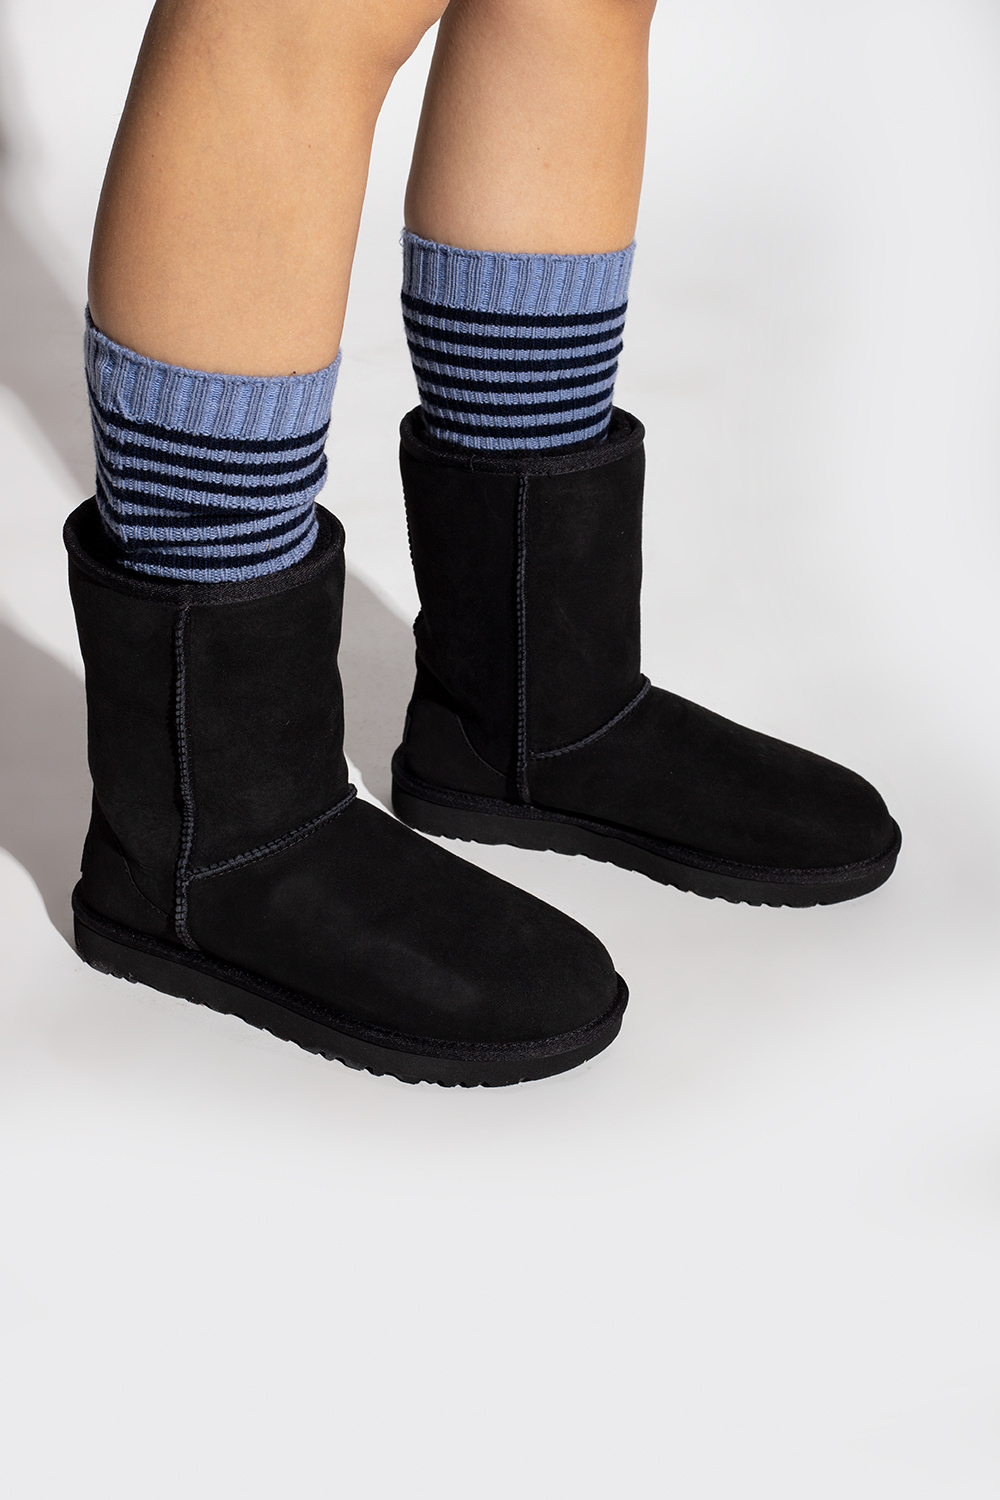 UGG ‘Classic Short II’ snow boots